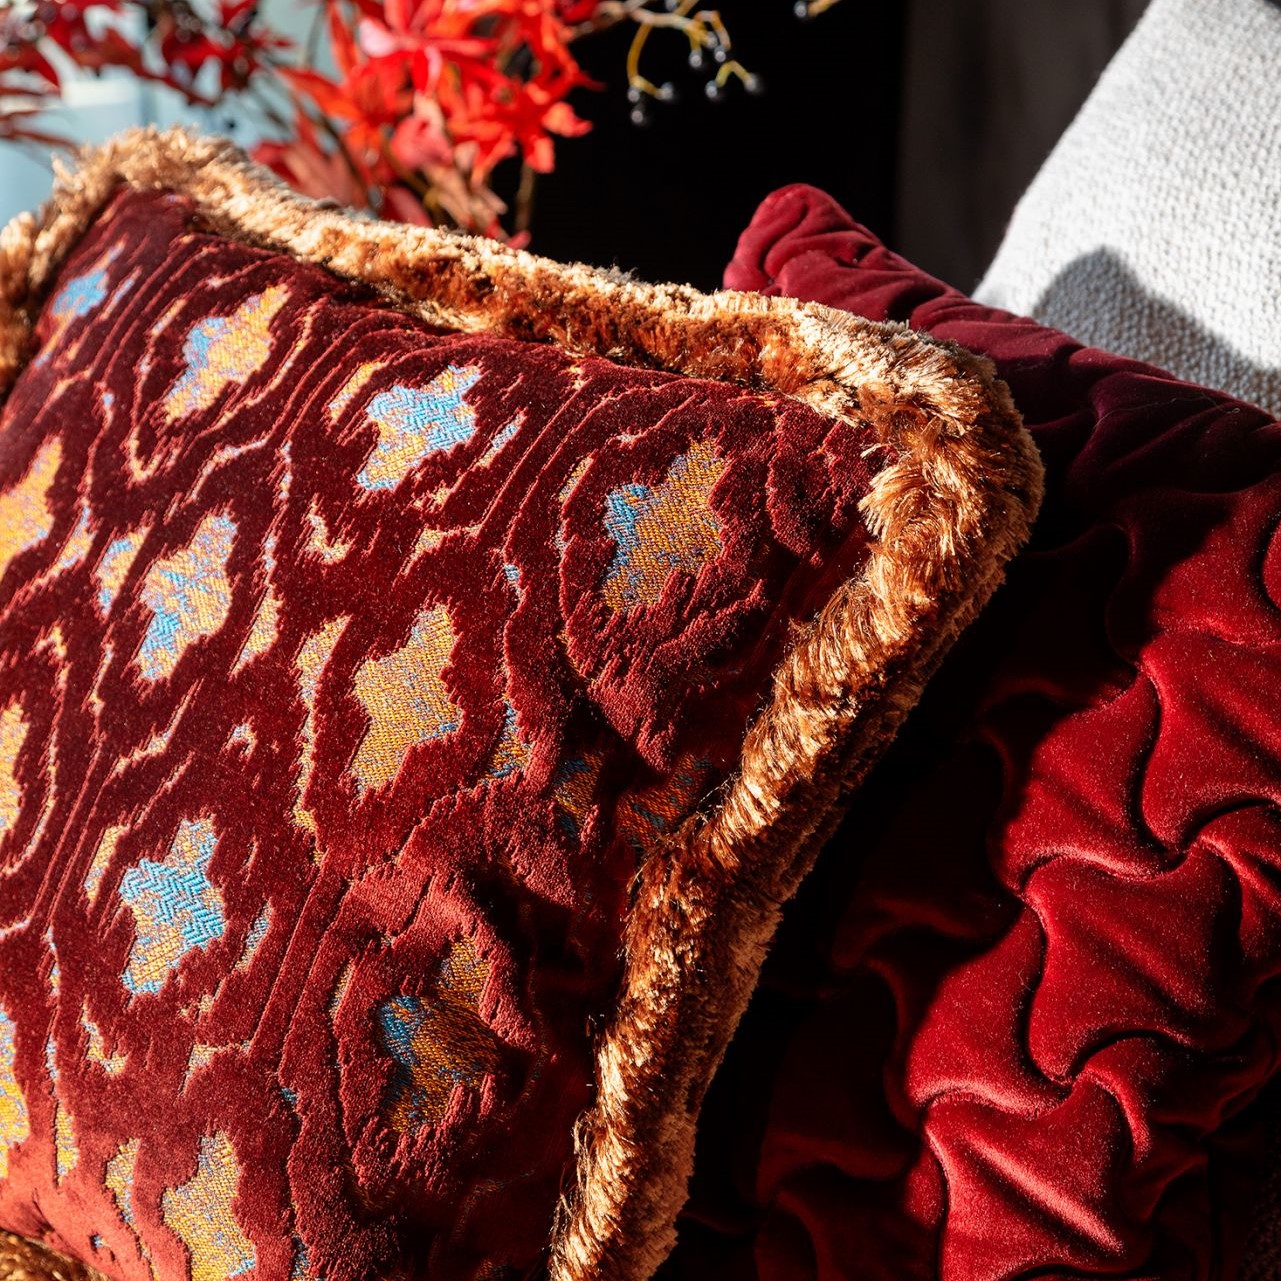 BIJOU | Cushion | 45x45 cm Merlot | Red | Hoii | With luxury inner cushion